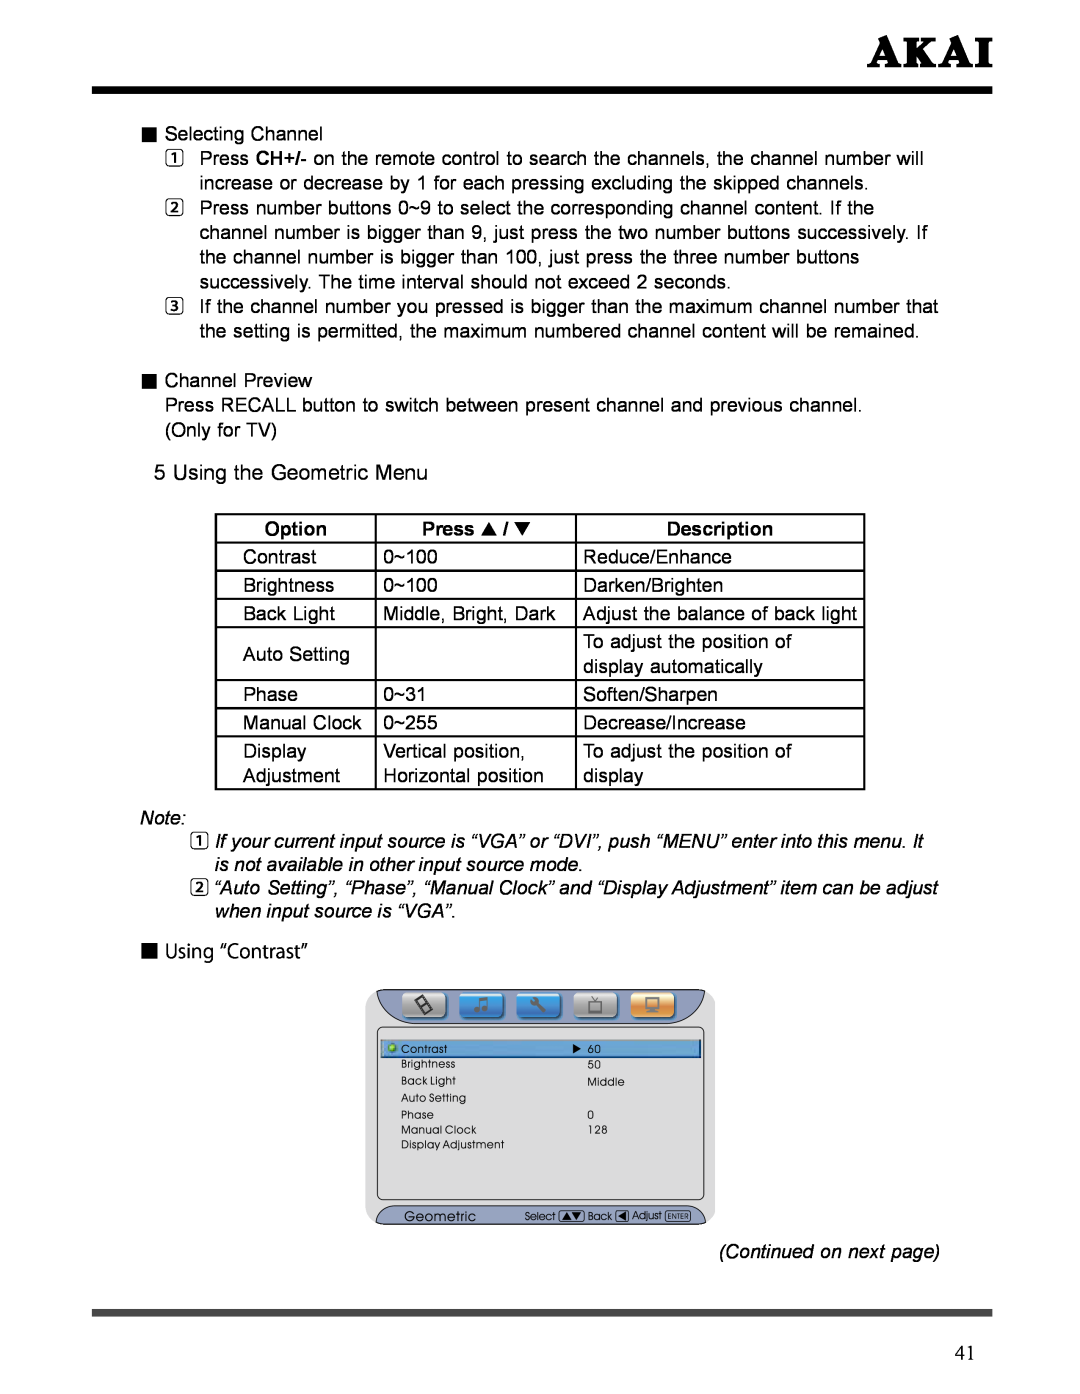 Akai LCT3226 manual Using the Geometric Menu, Option, Press, Description, Continued on next page 